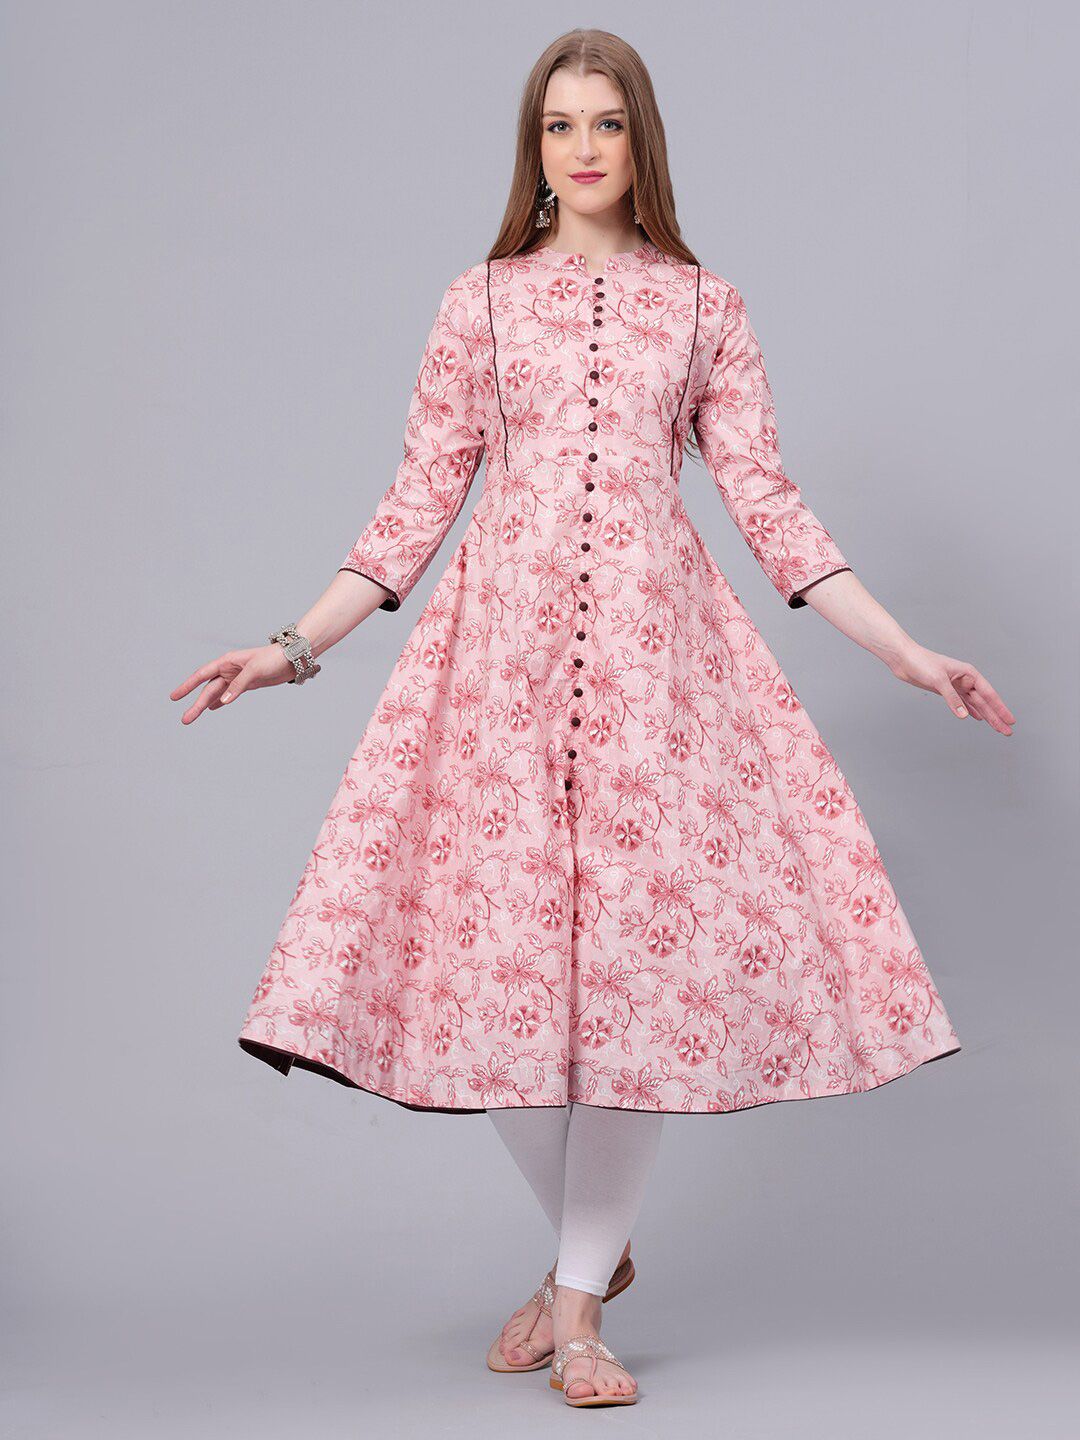 JC4U Pink Floral Print Fit & Flare Midi Dress Price in India